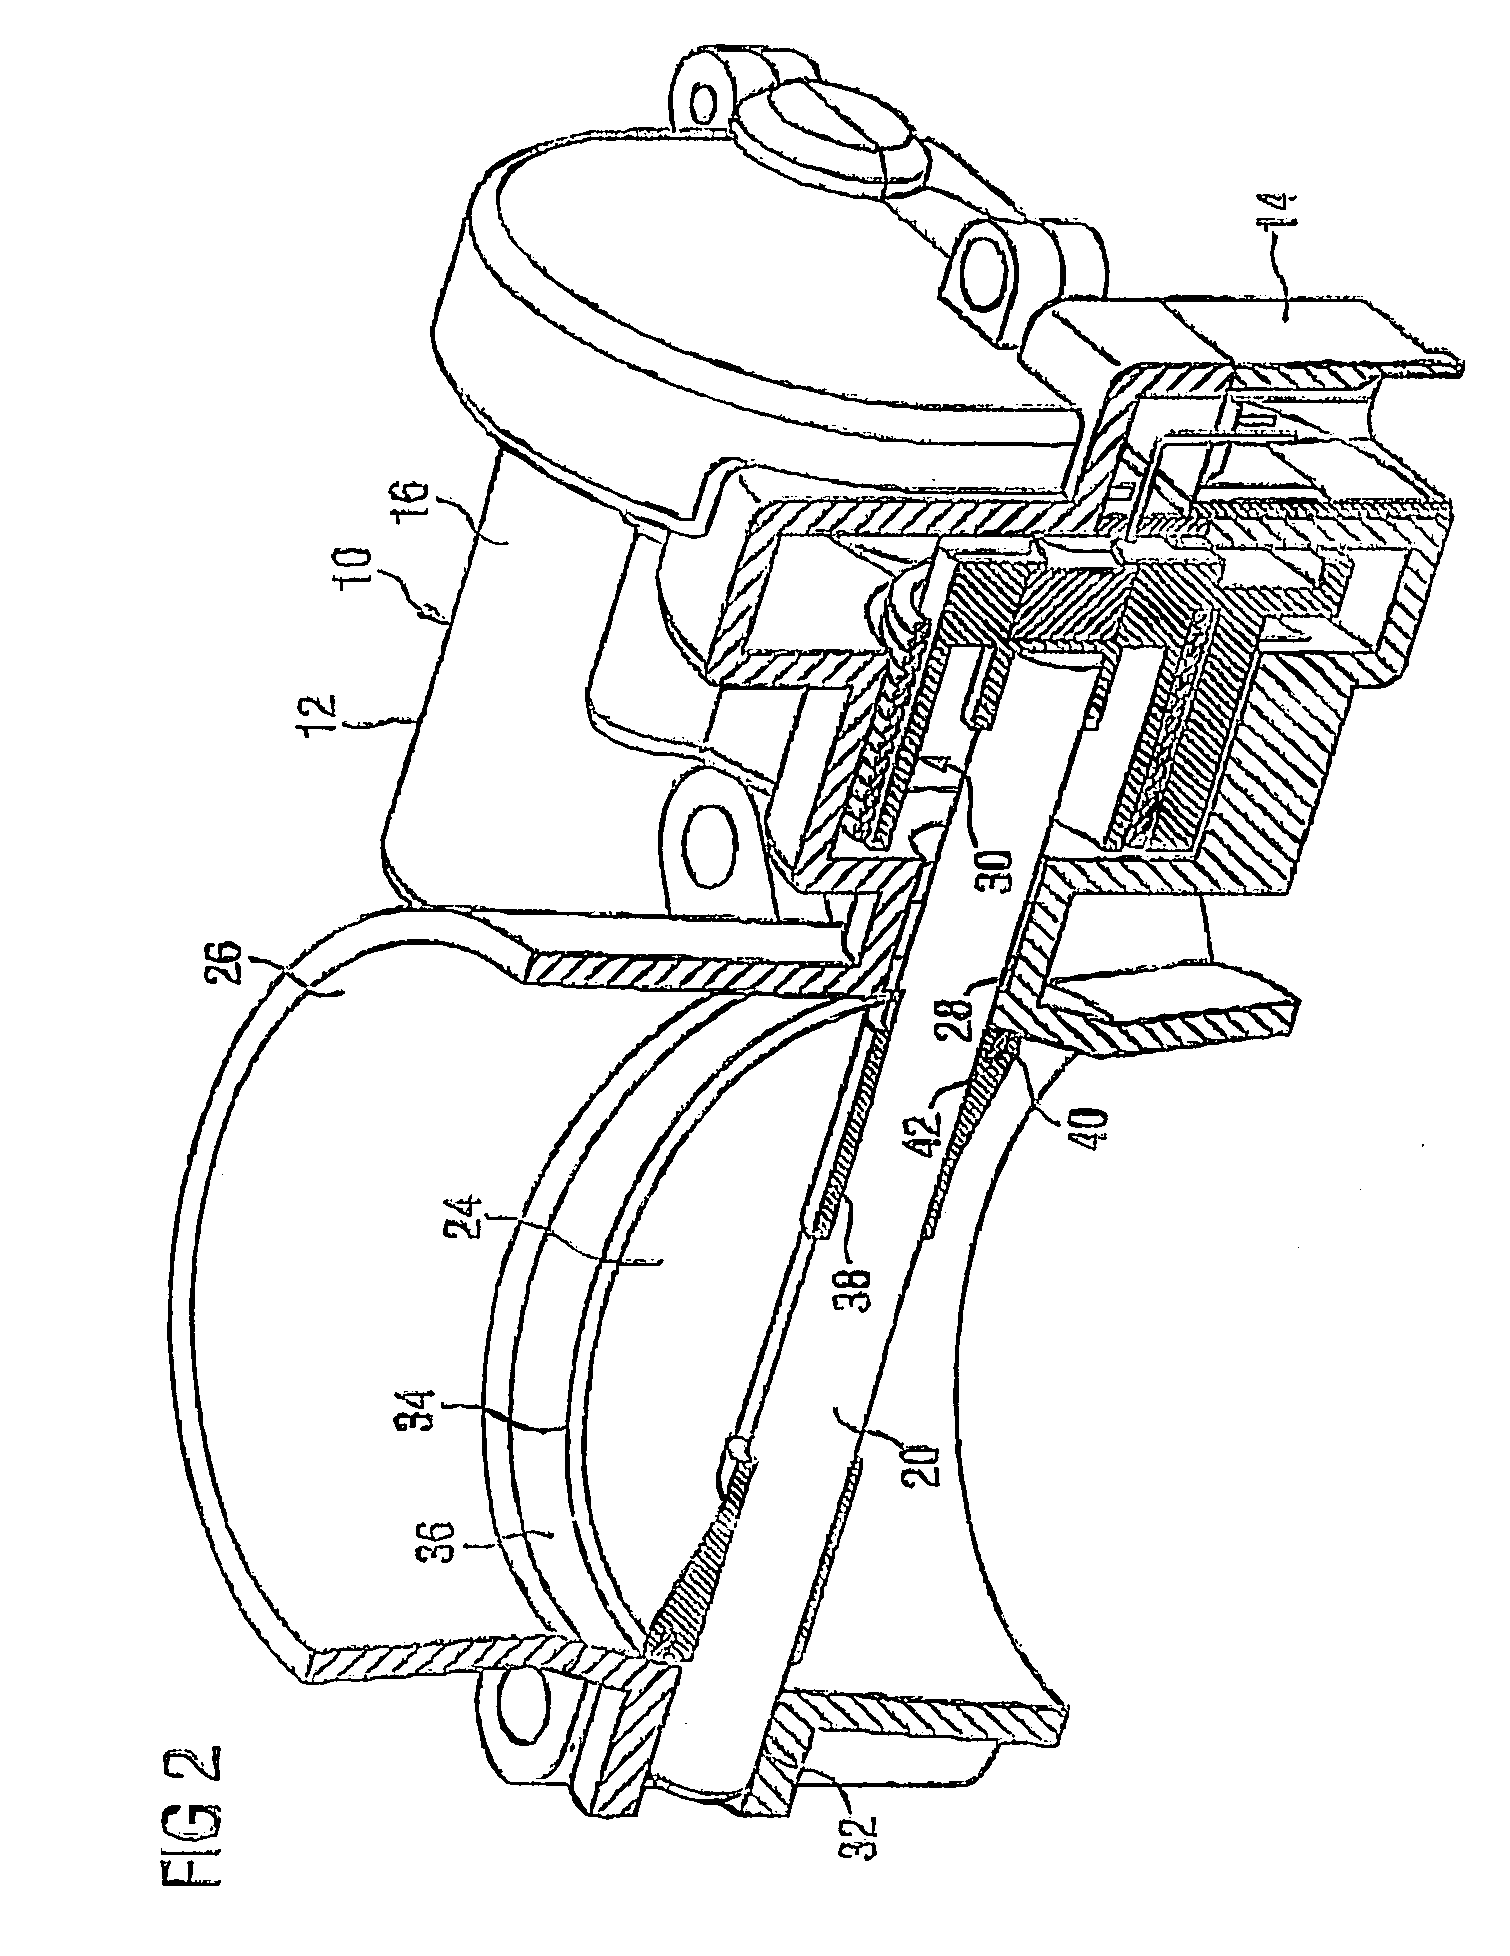 Throttle valve positioning device